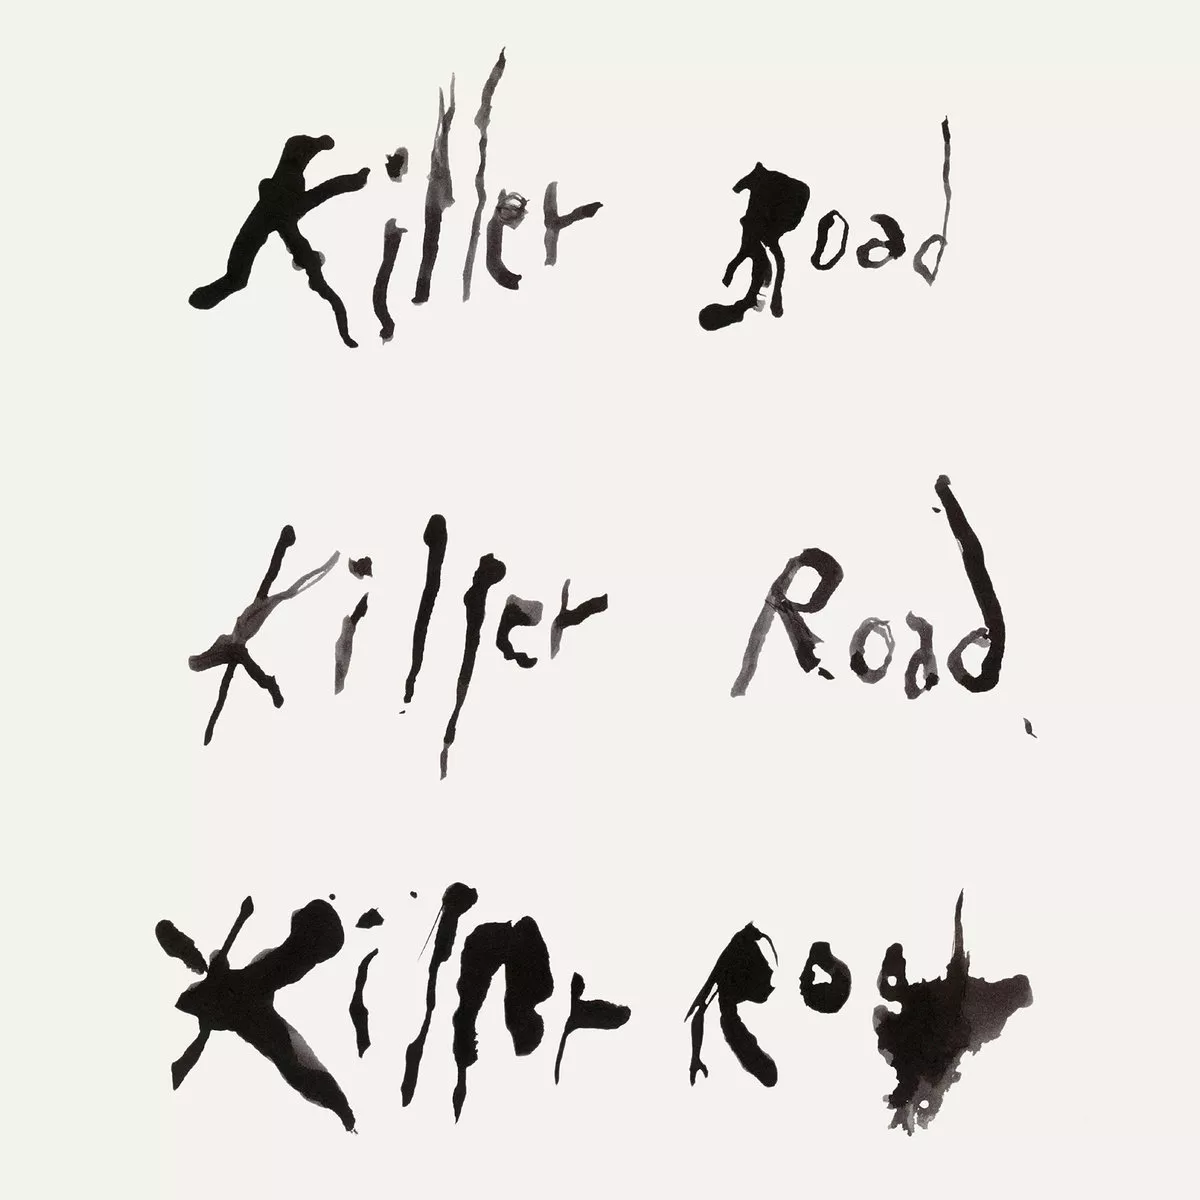 Killer Road - Soundwalk Collective & Jesse Paris Smith featuring Patti Smith